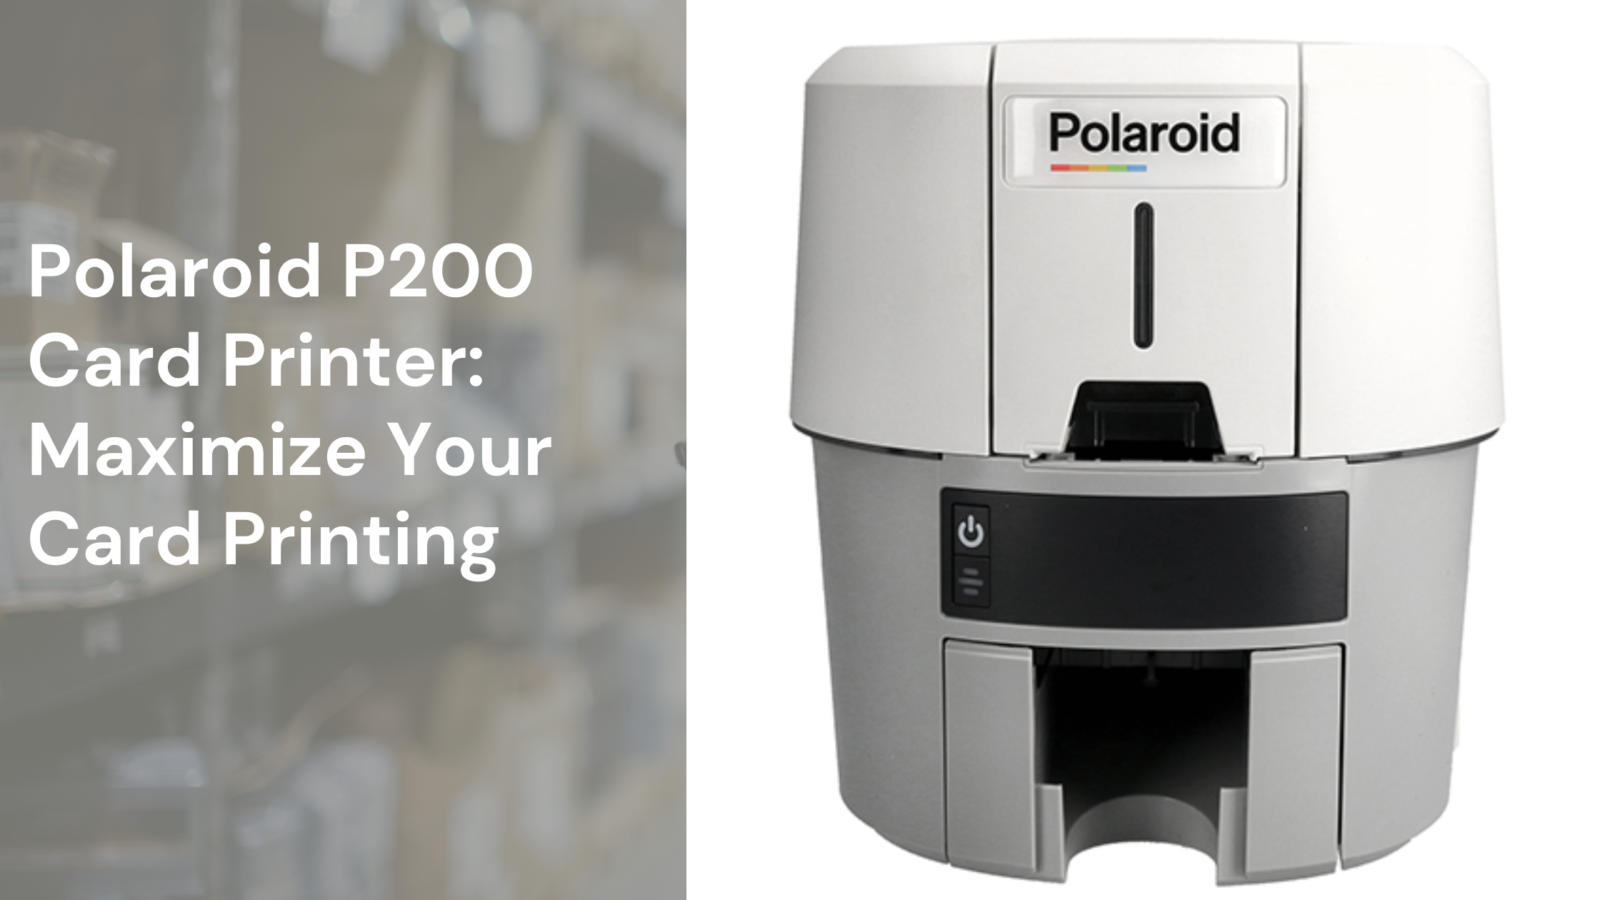 Polaroid P200 Card Printer: Maximize Your Card Printing